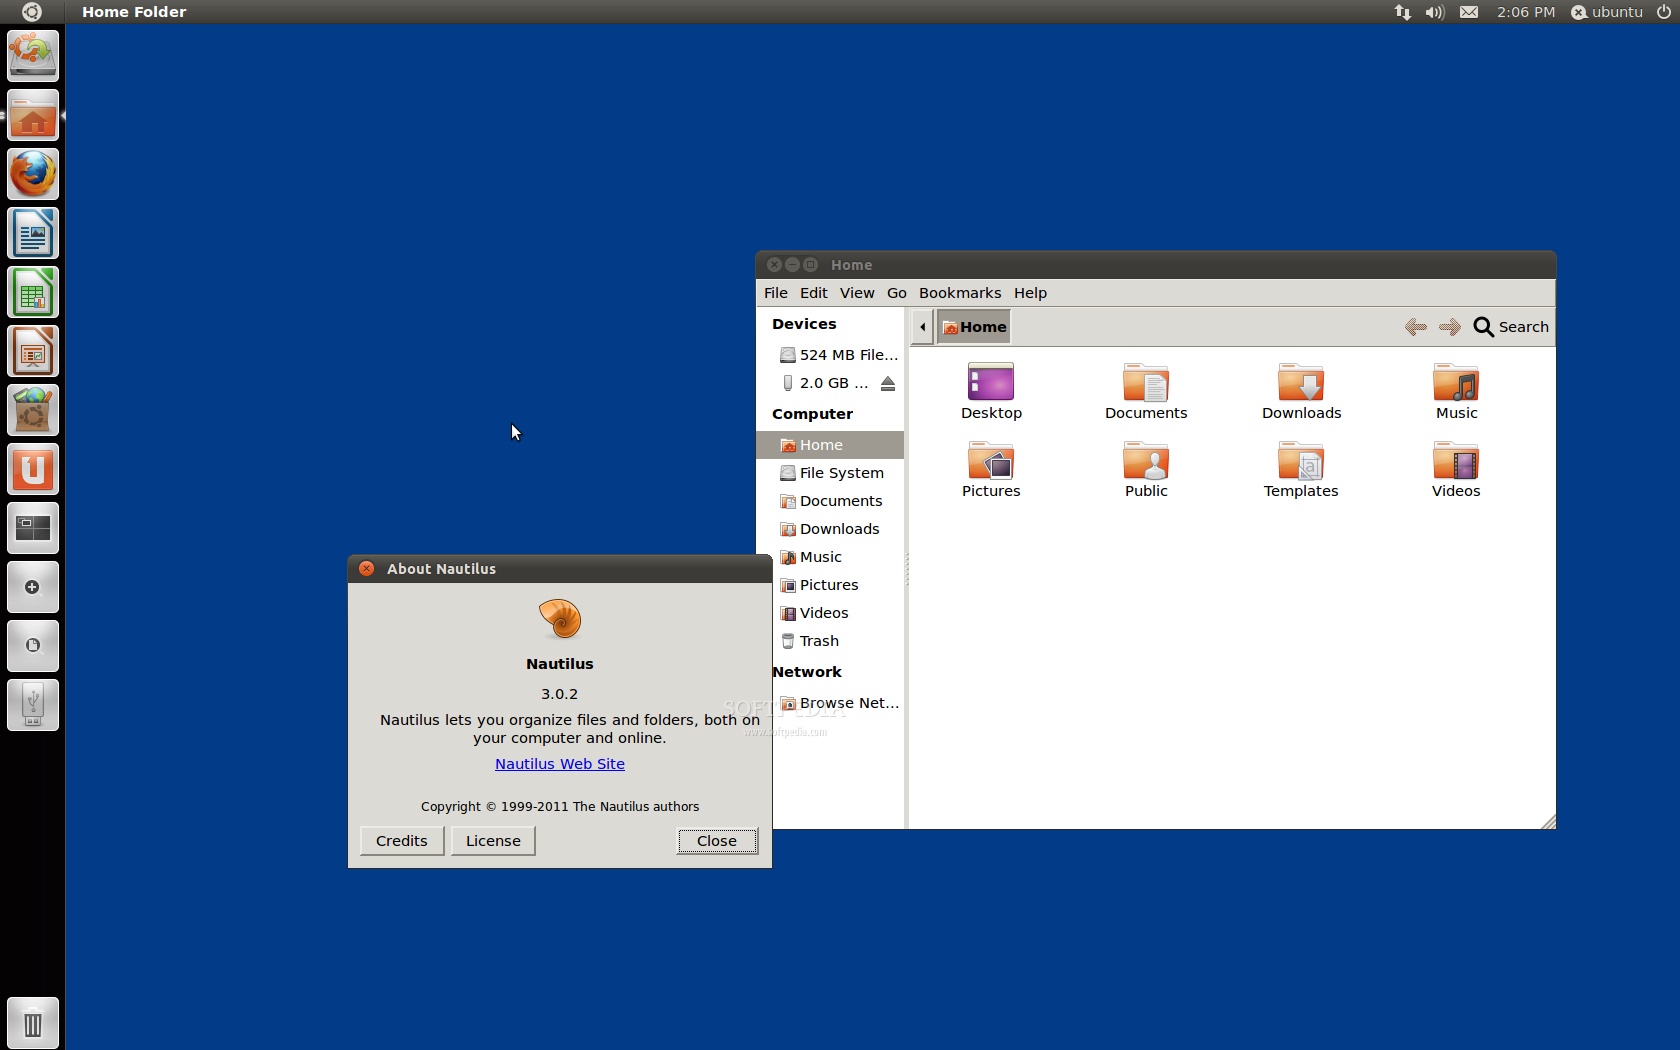 Canonical libera Ubuntu 11.10 Alpha 1 com GNOME 3 para download